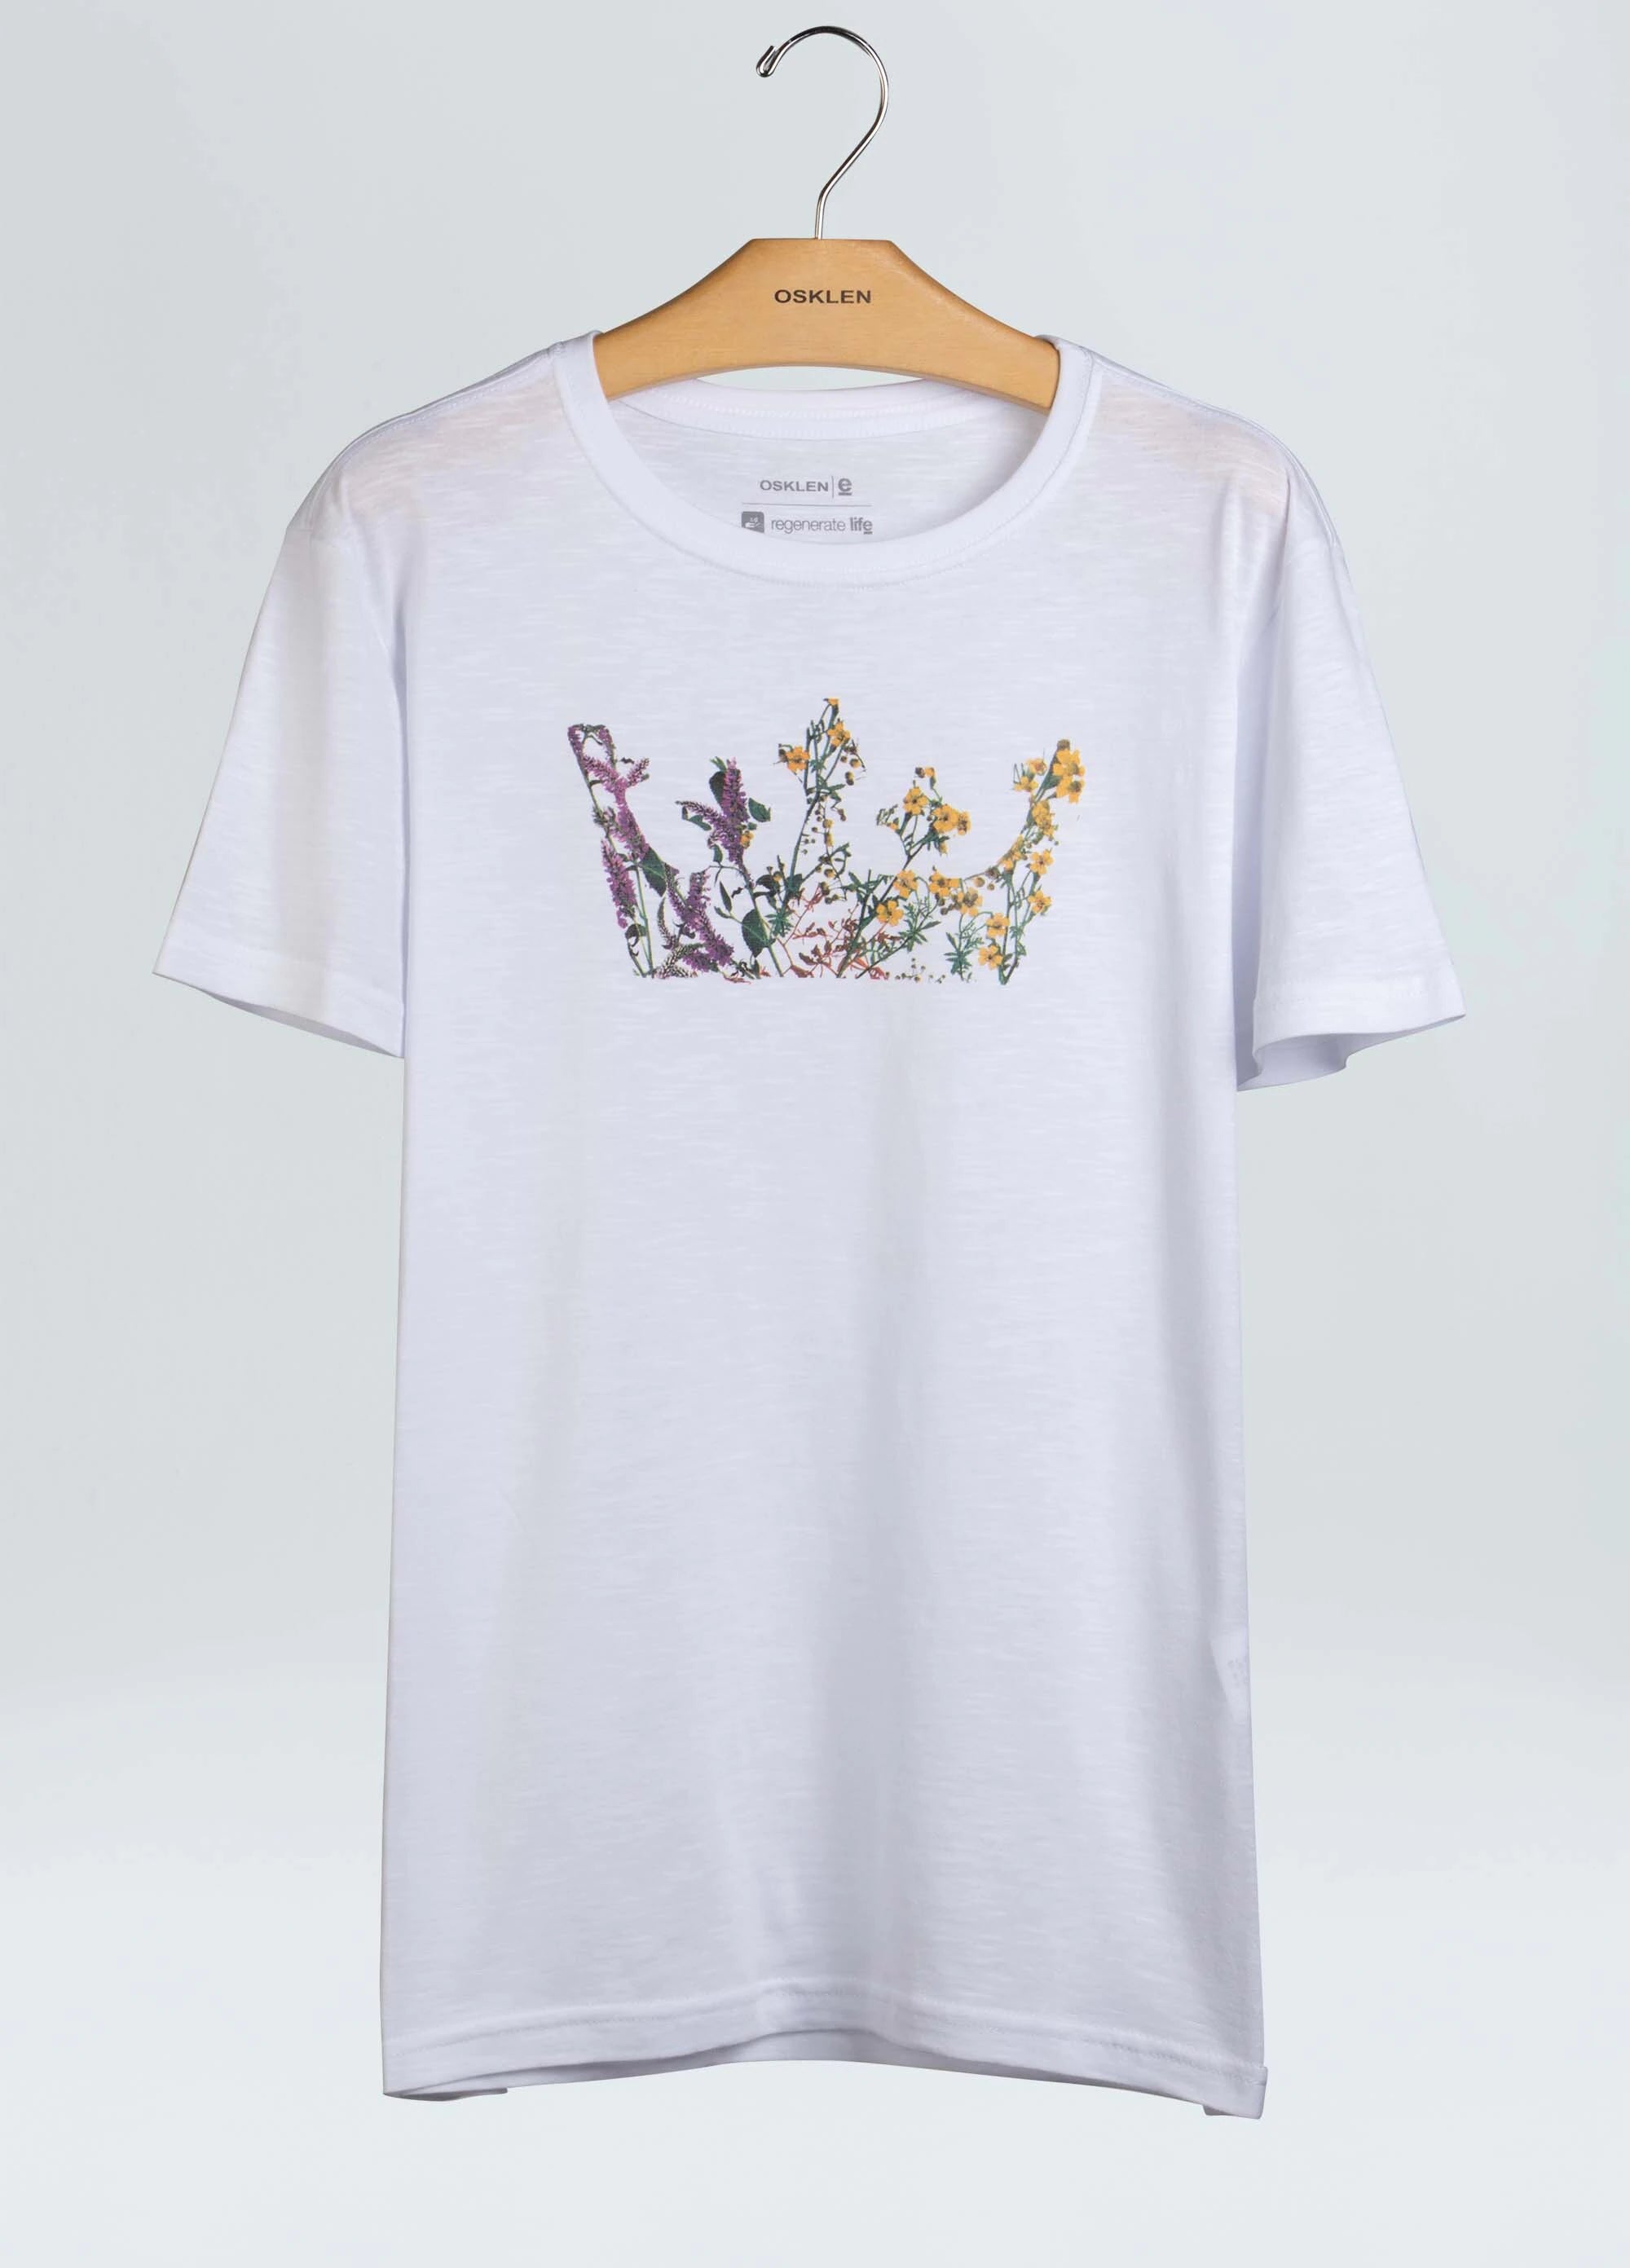 Osklen-T-Shirt Organic Rough Flower Crown-Justbrazil